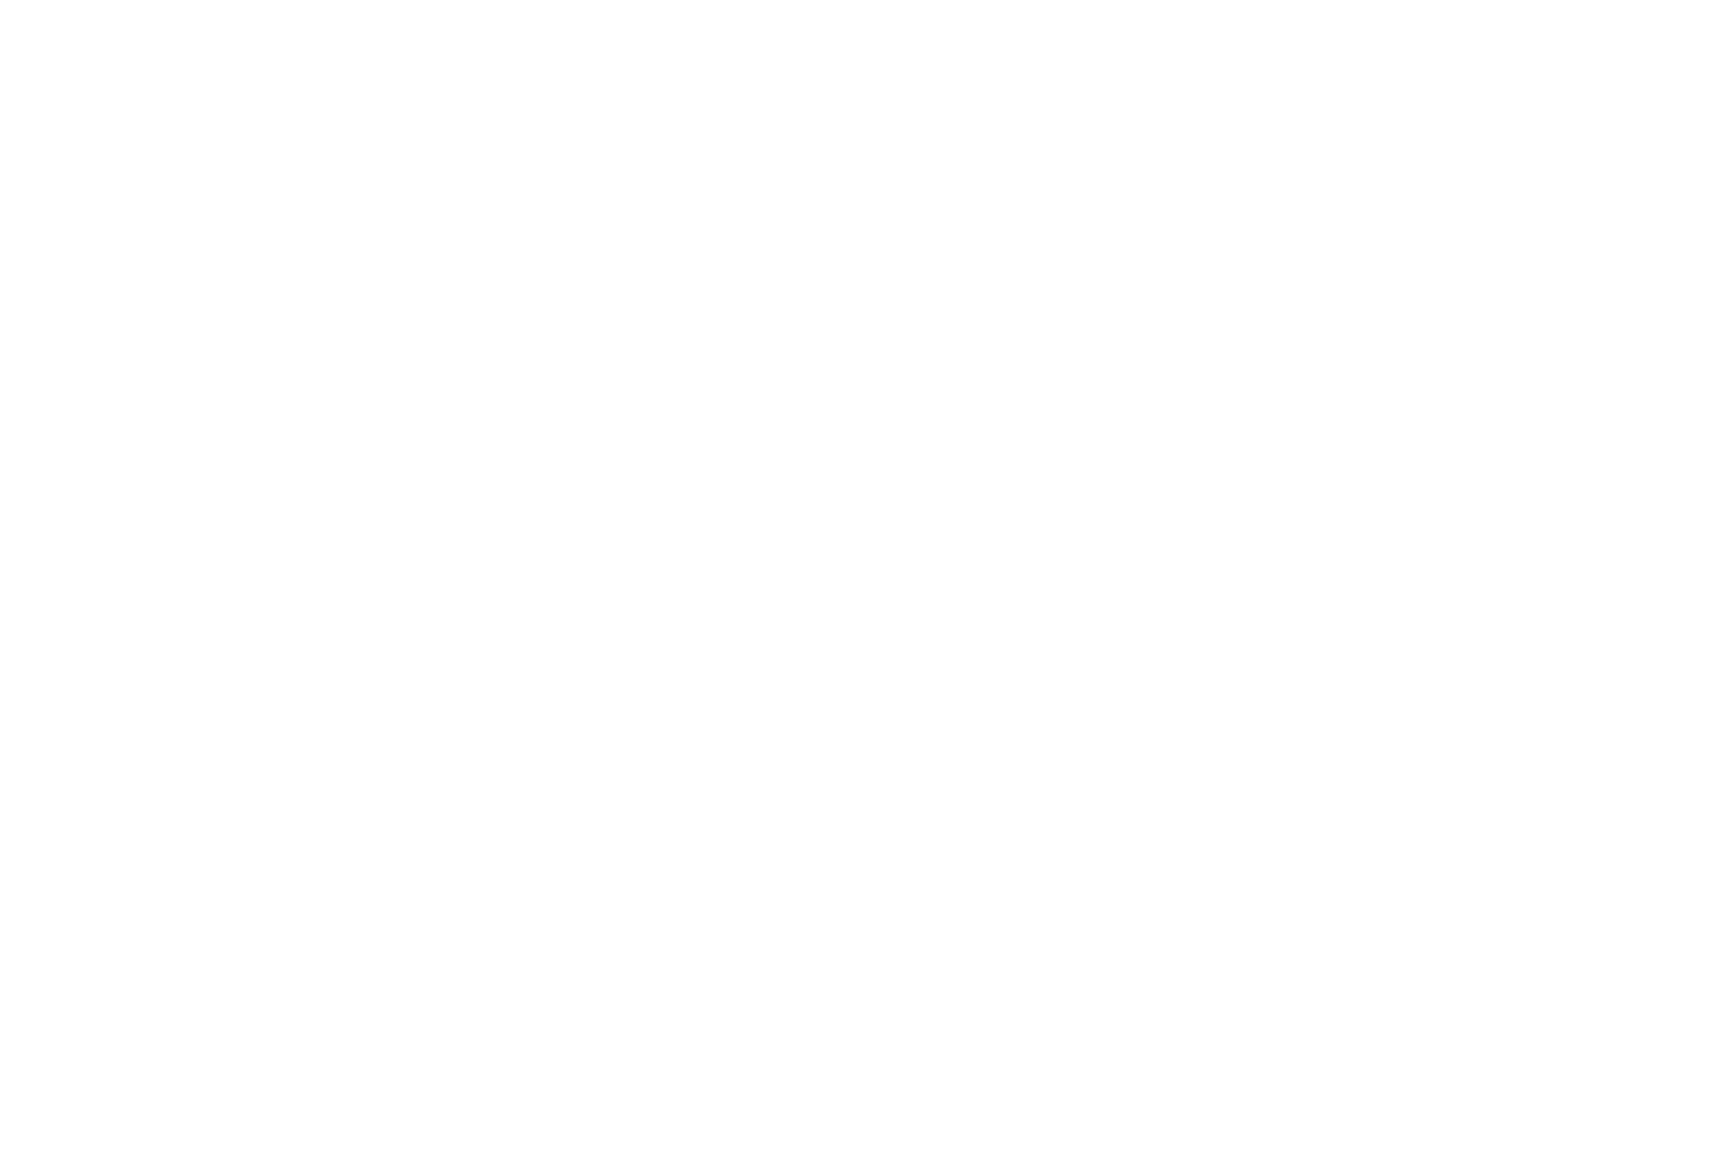 OUTSTANDING ACHIEVEMENT AWARD - BEST FILM SCORE - World Film Carnival - Singapore - 2020